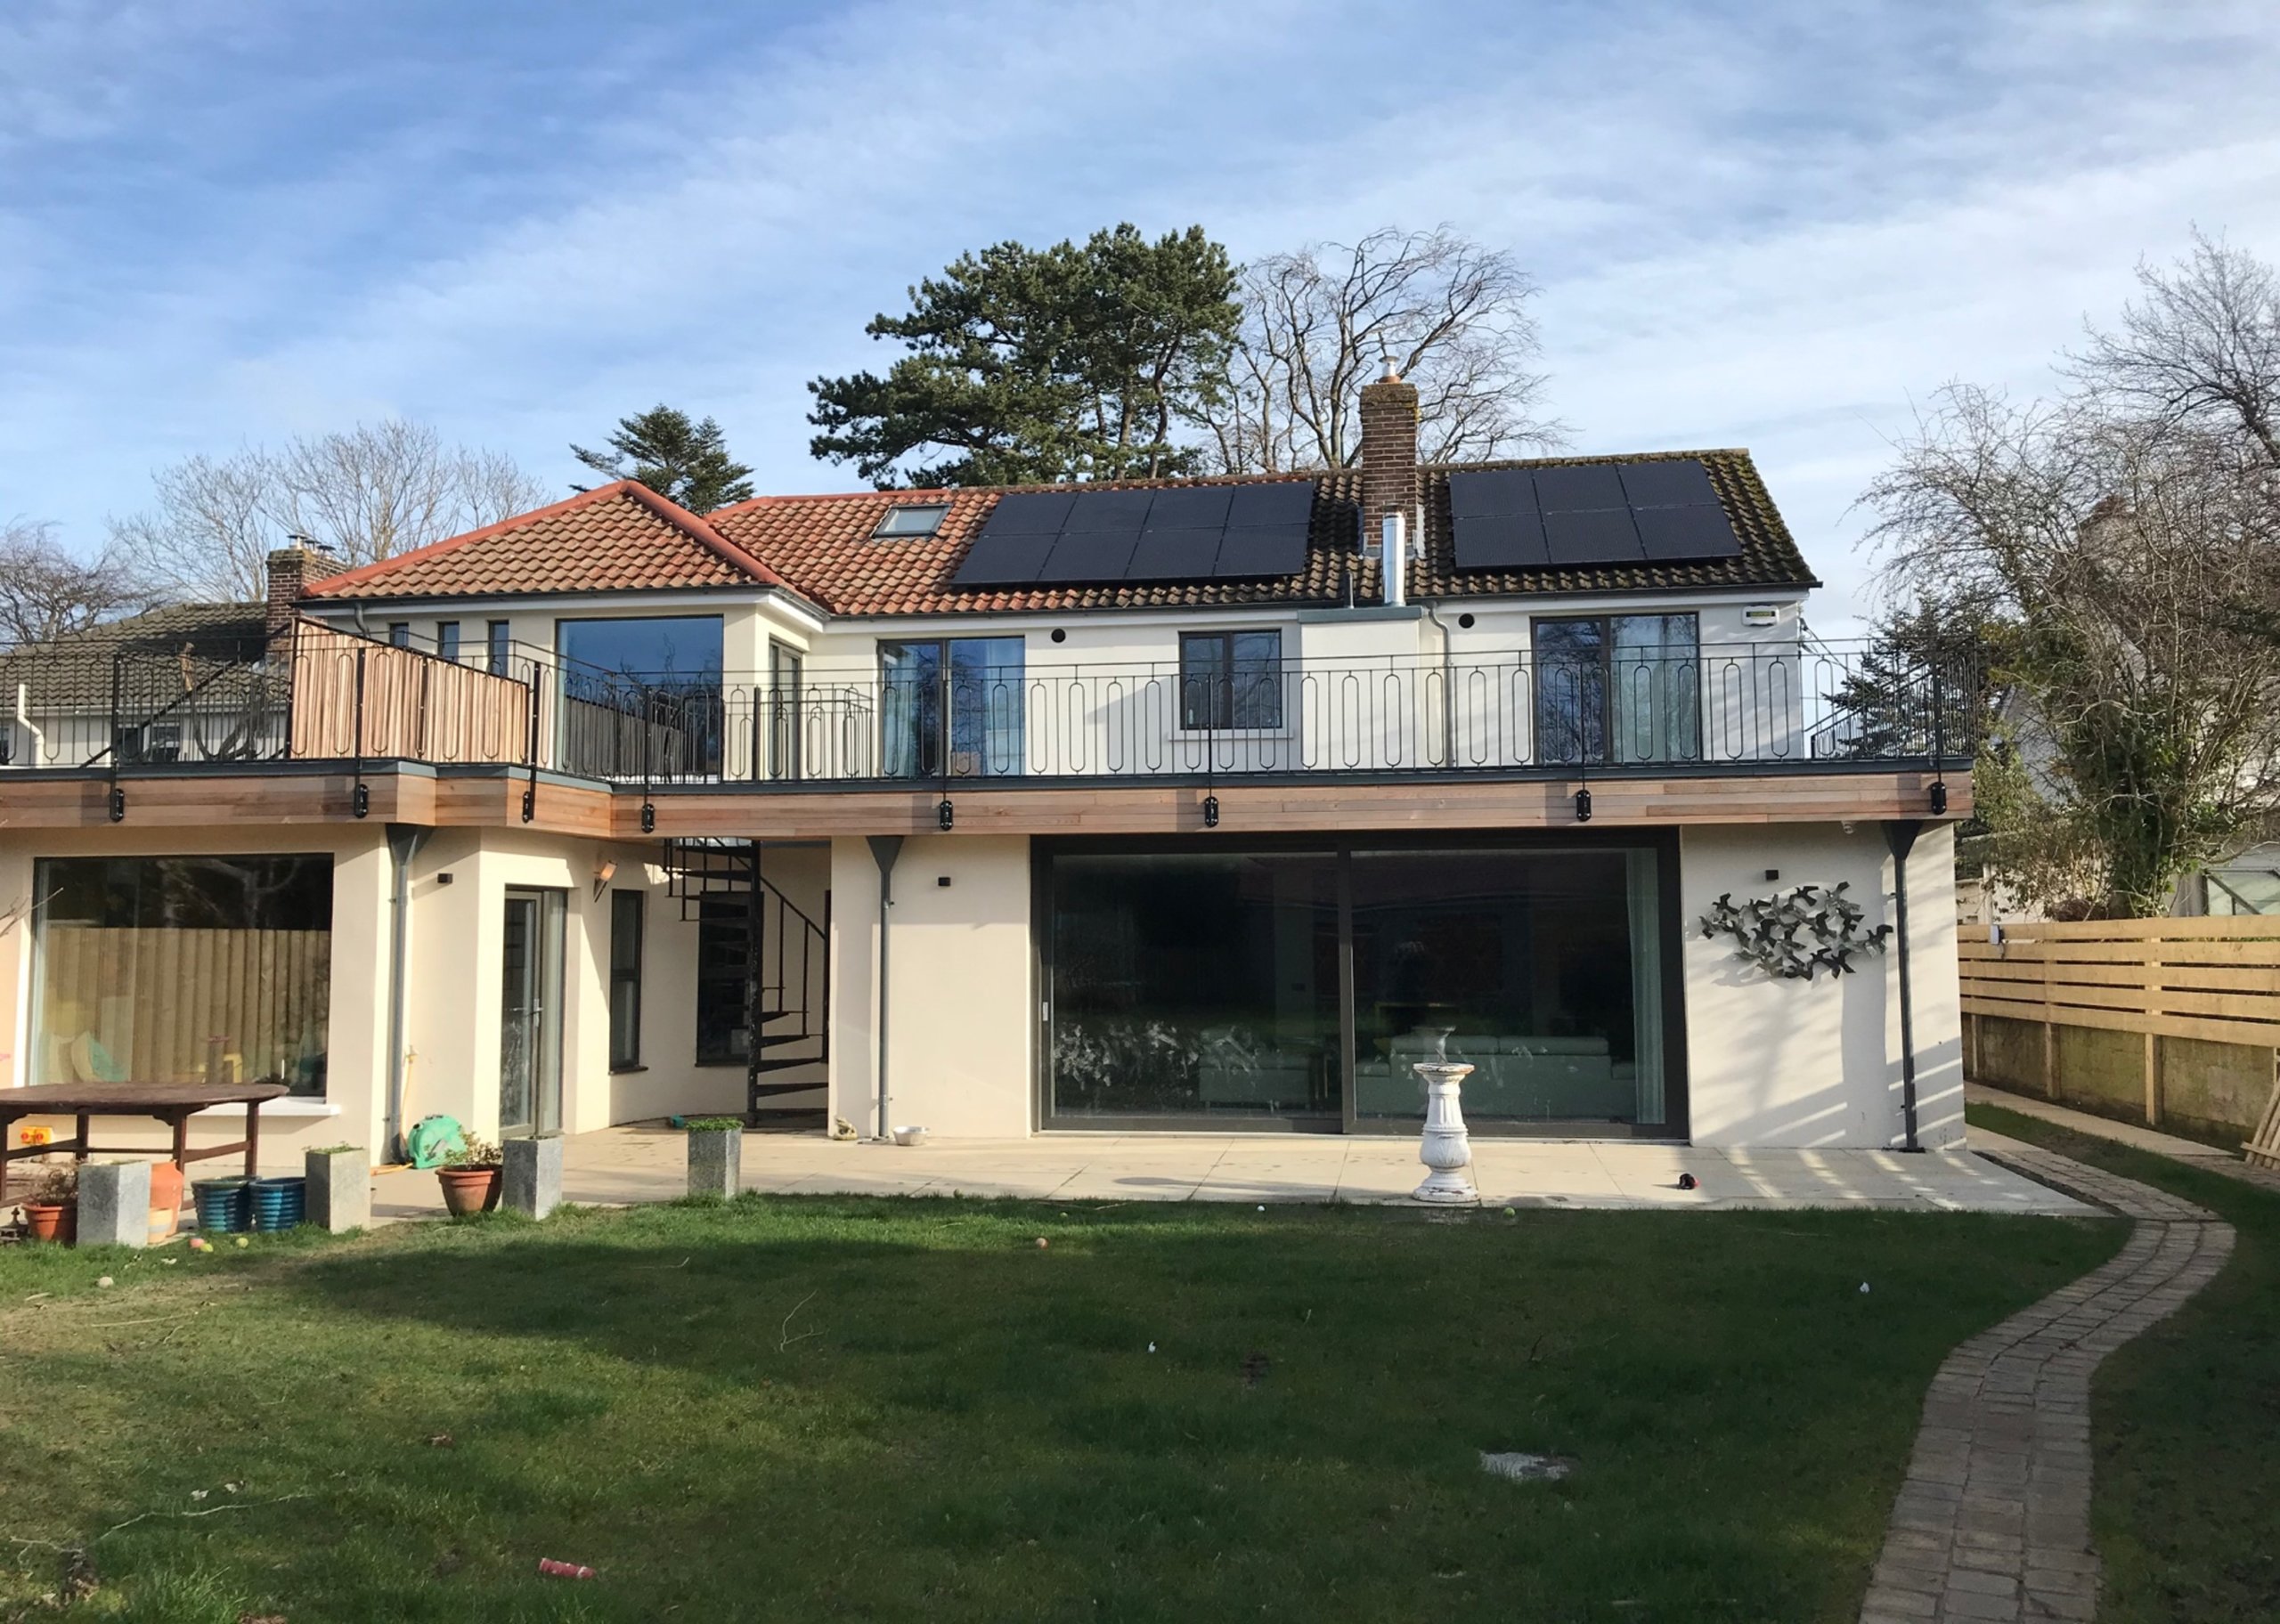 Shankhill, Co. Dublin 4.2kW home solar PV installation